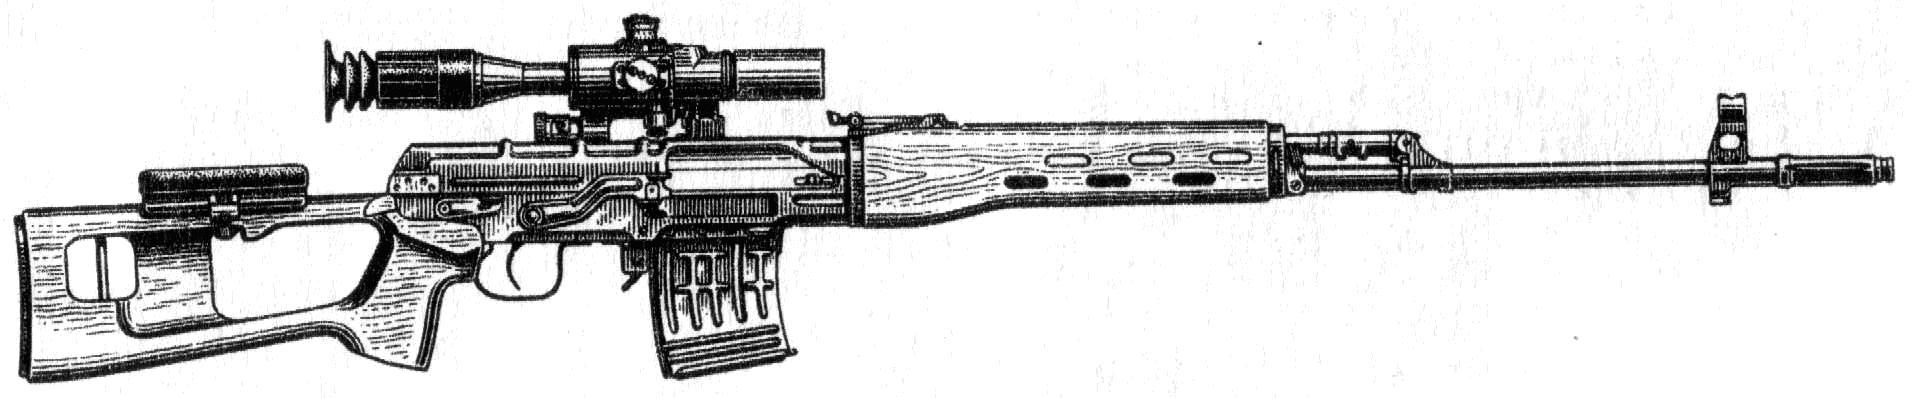 Рис. 1. Общий вид снайперской винтовки Драгунова: